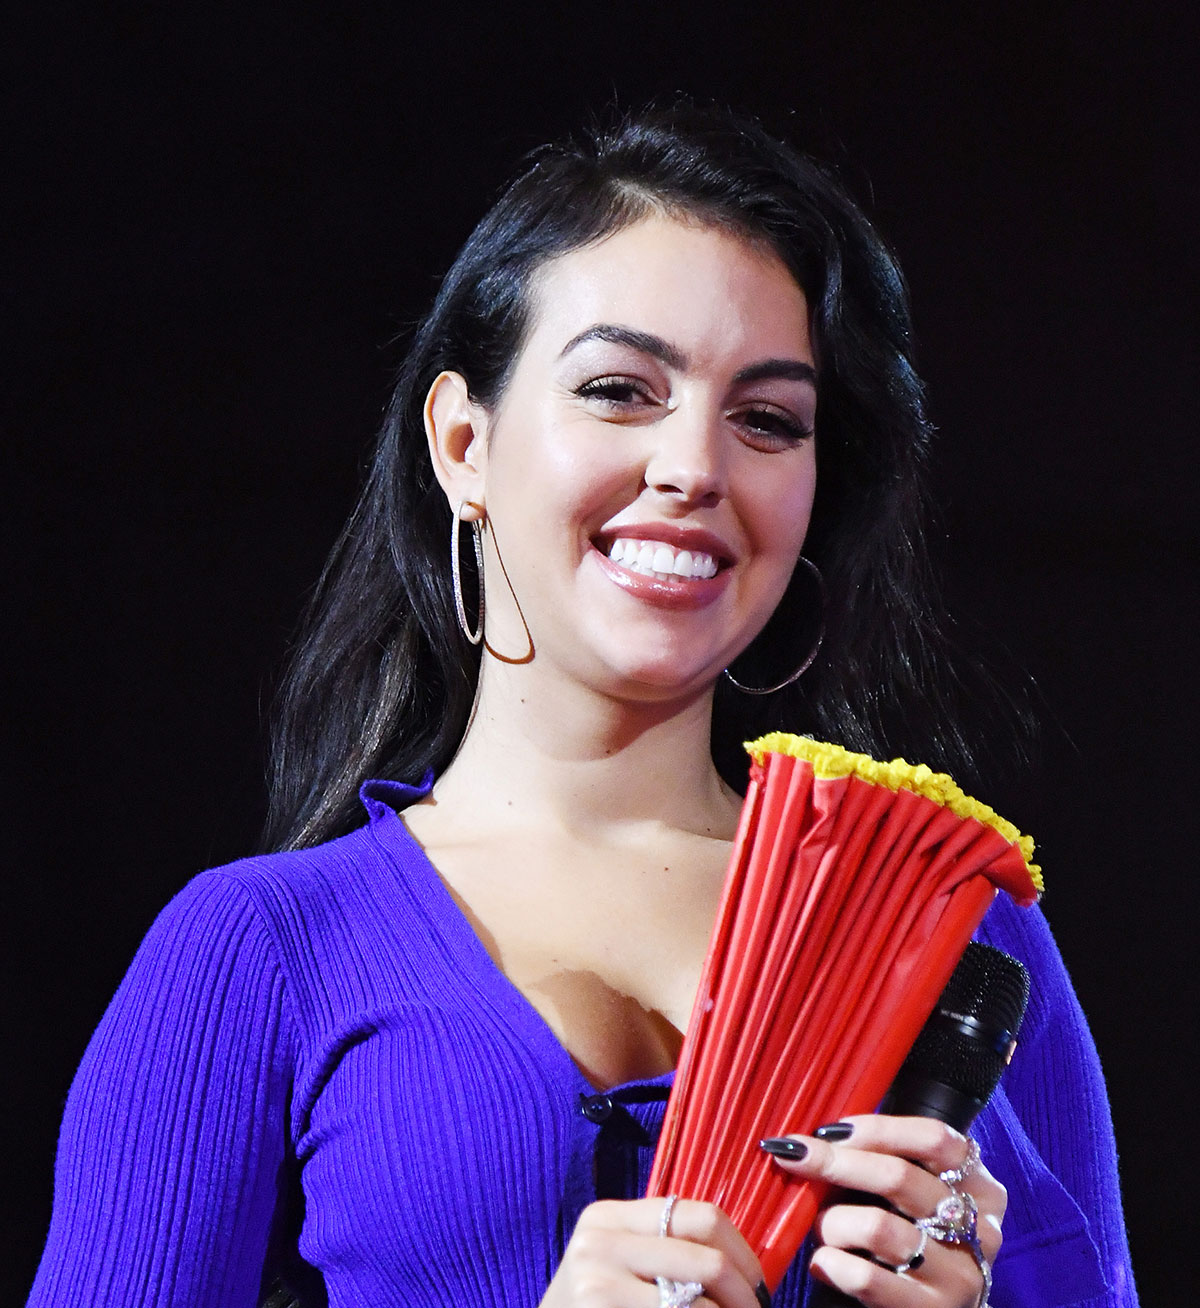 Georgina Rodríguez